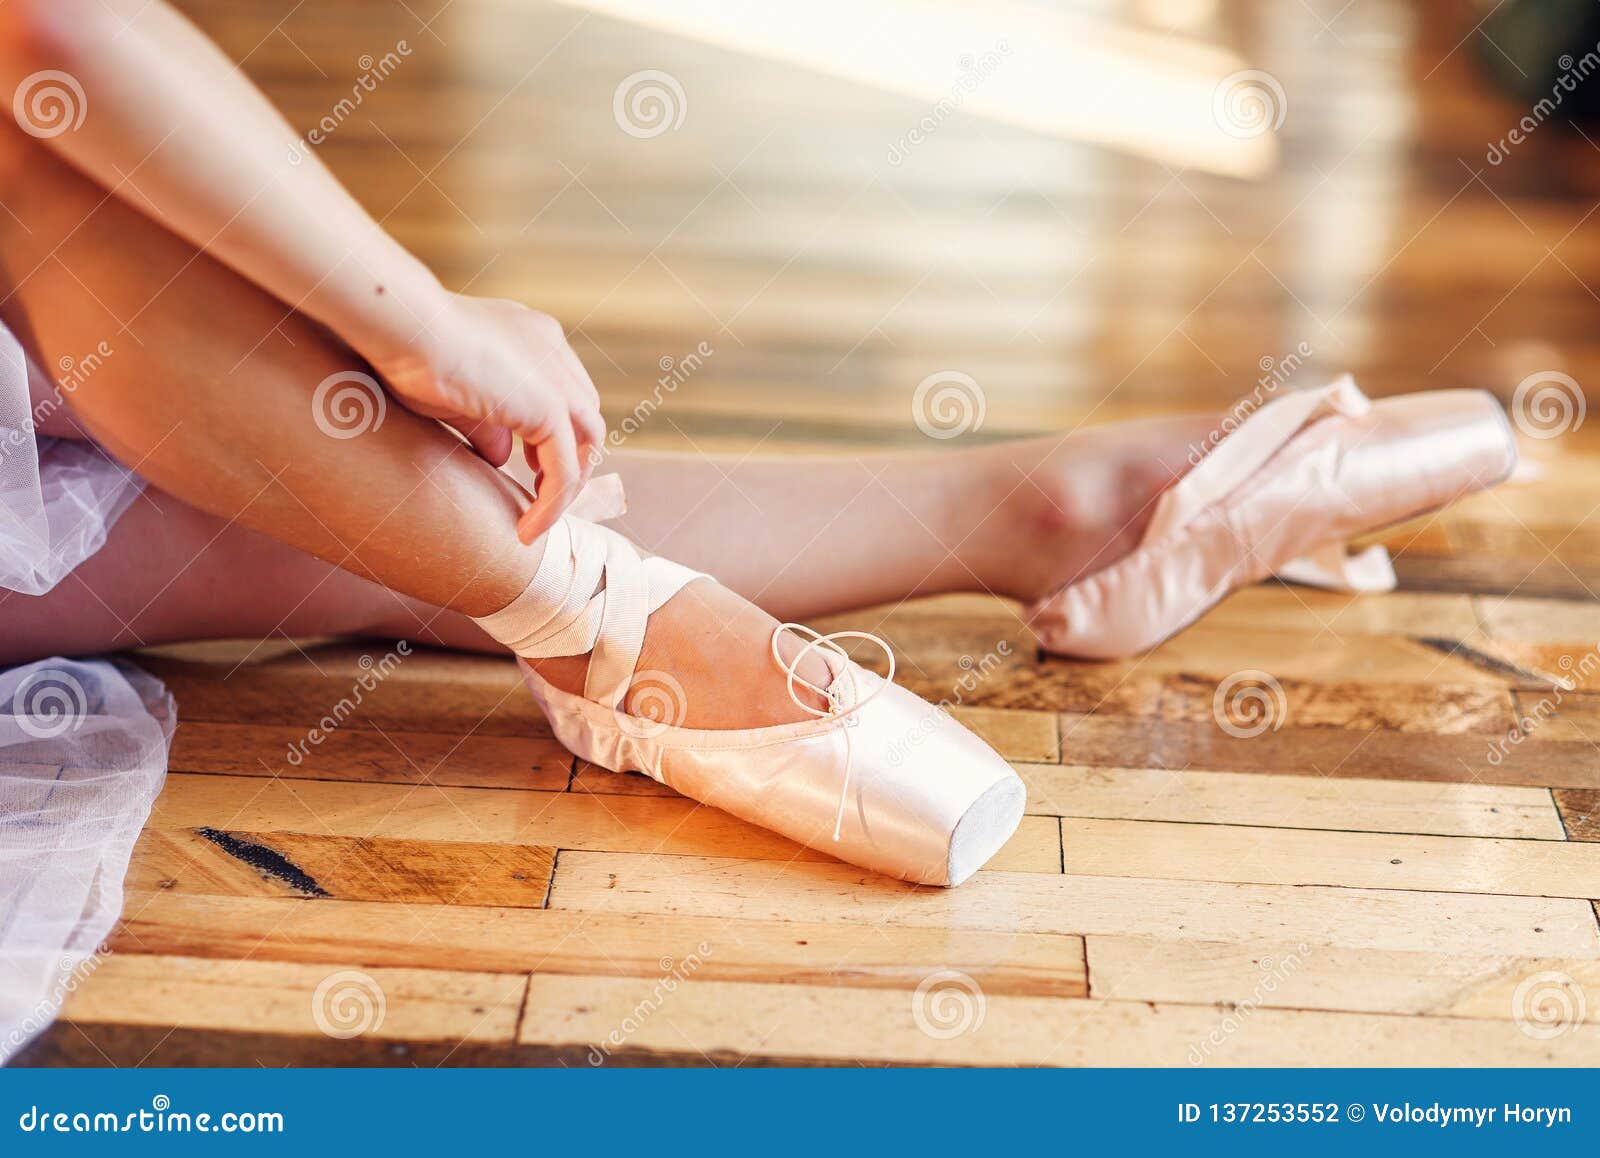 school ballet shoes